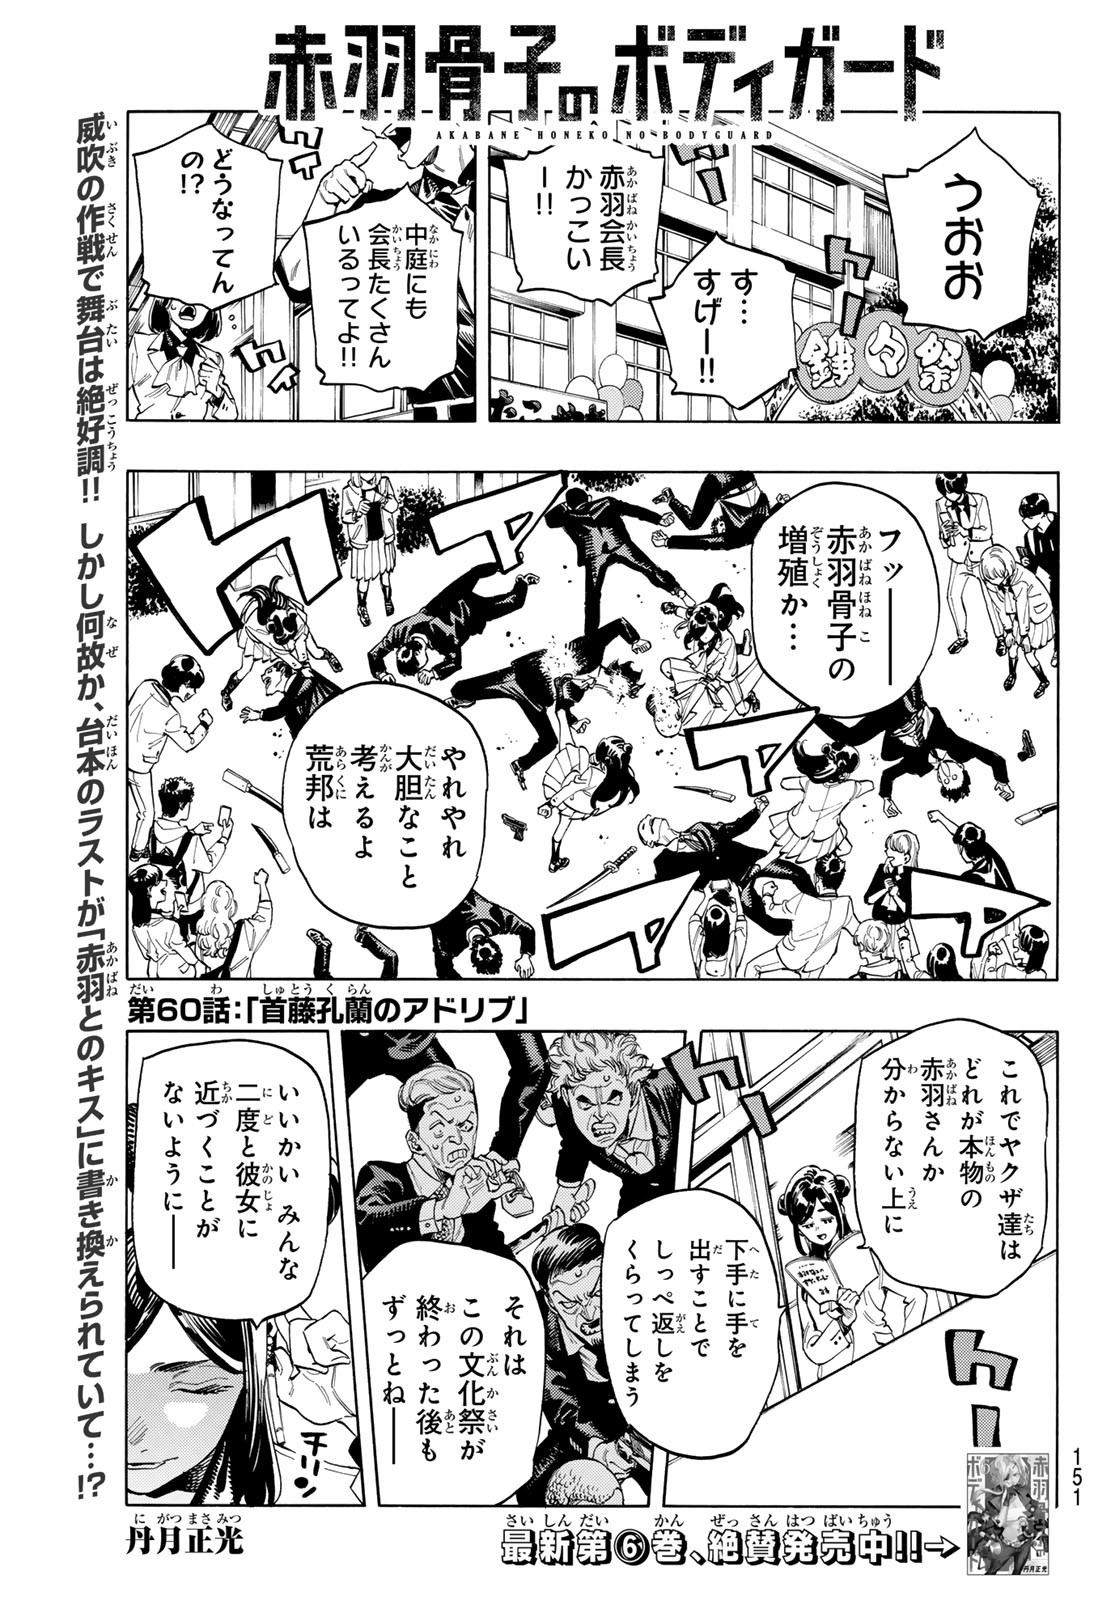 Akabane Honeko no Bodyguard - Chapter 60 - Page 1